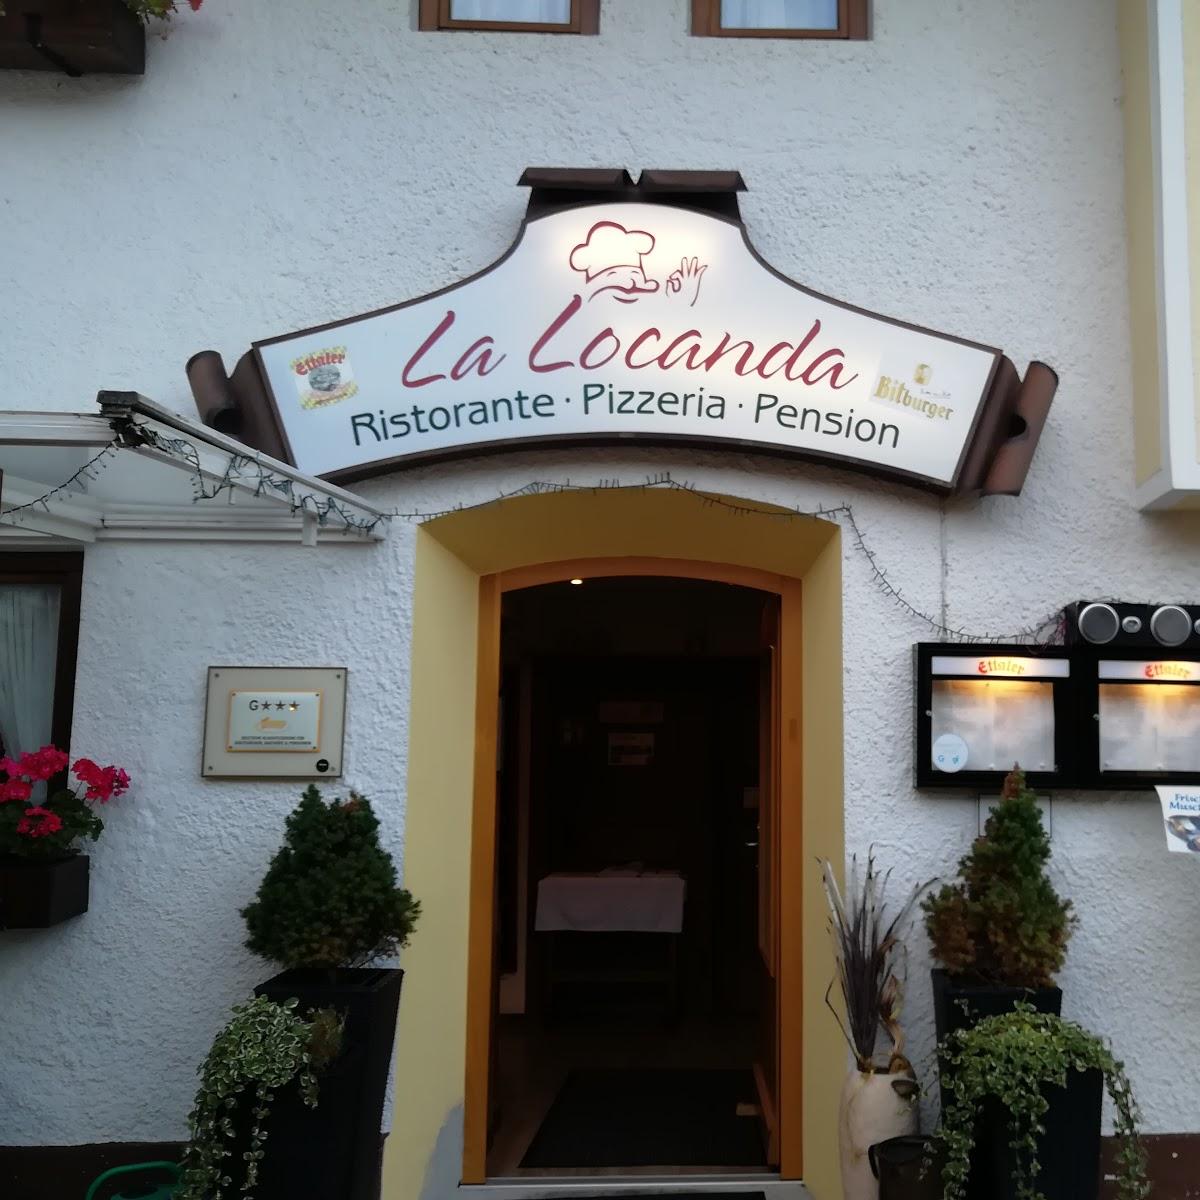 Restaurant "La Locanda" in  Ohlstadt